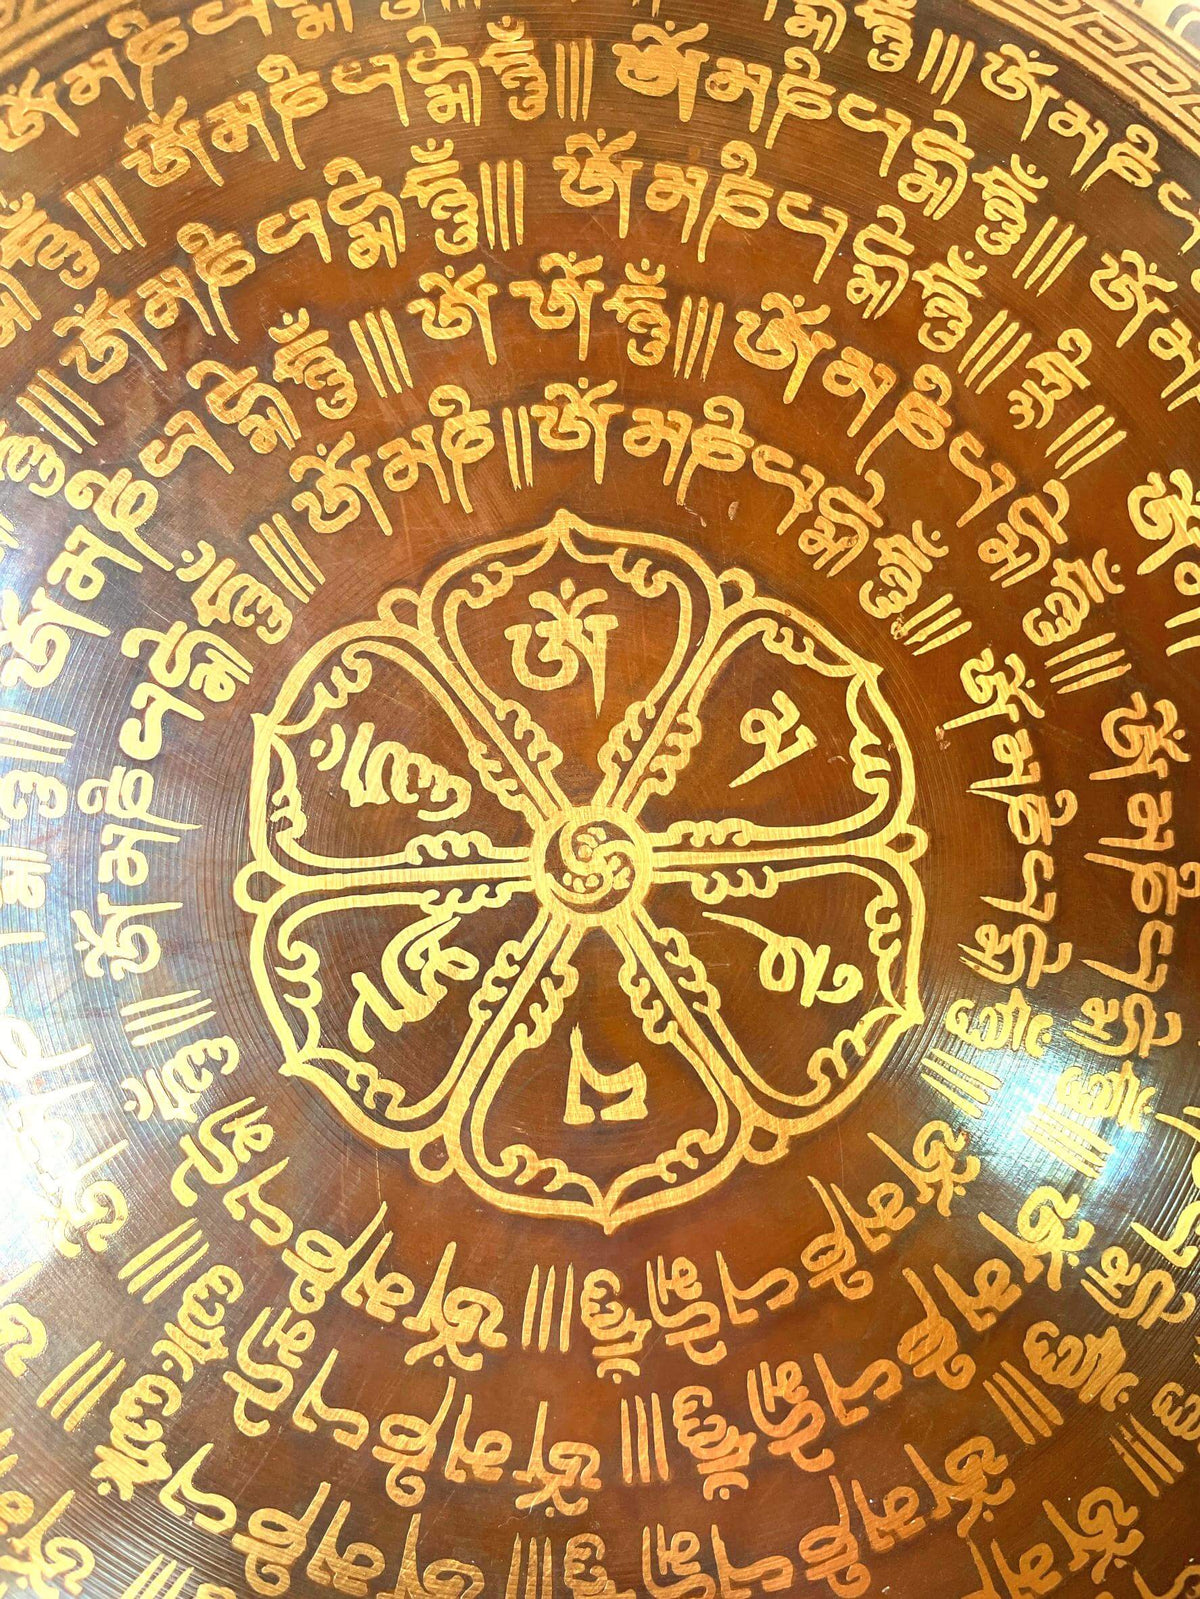 Genuine Buddhist Gong, Om Mani Padme Hum Mantra - Handmade In Nepal